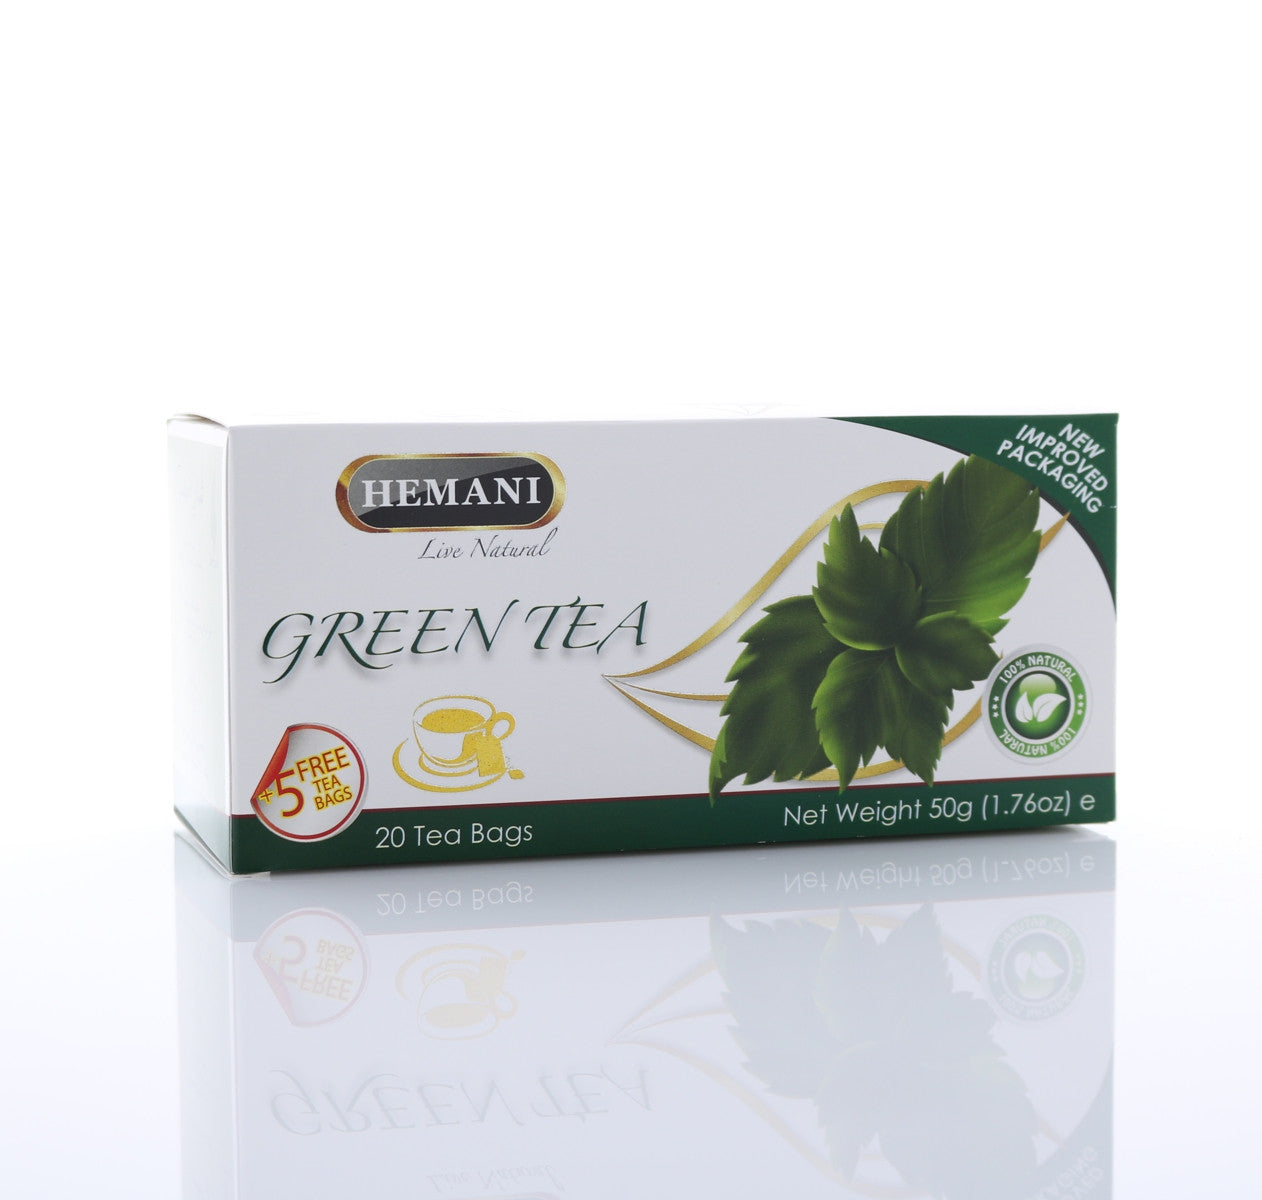 HEMANI Green Tea Pure 40g